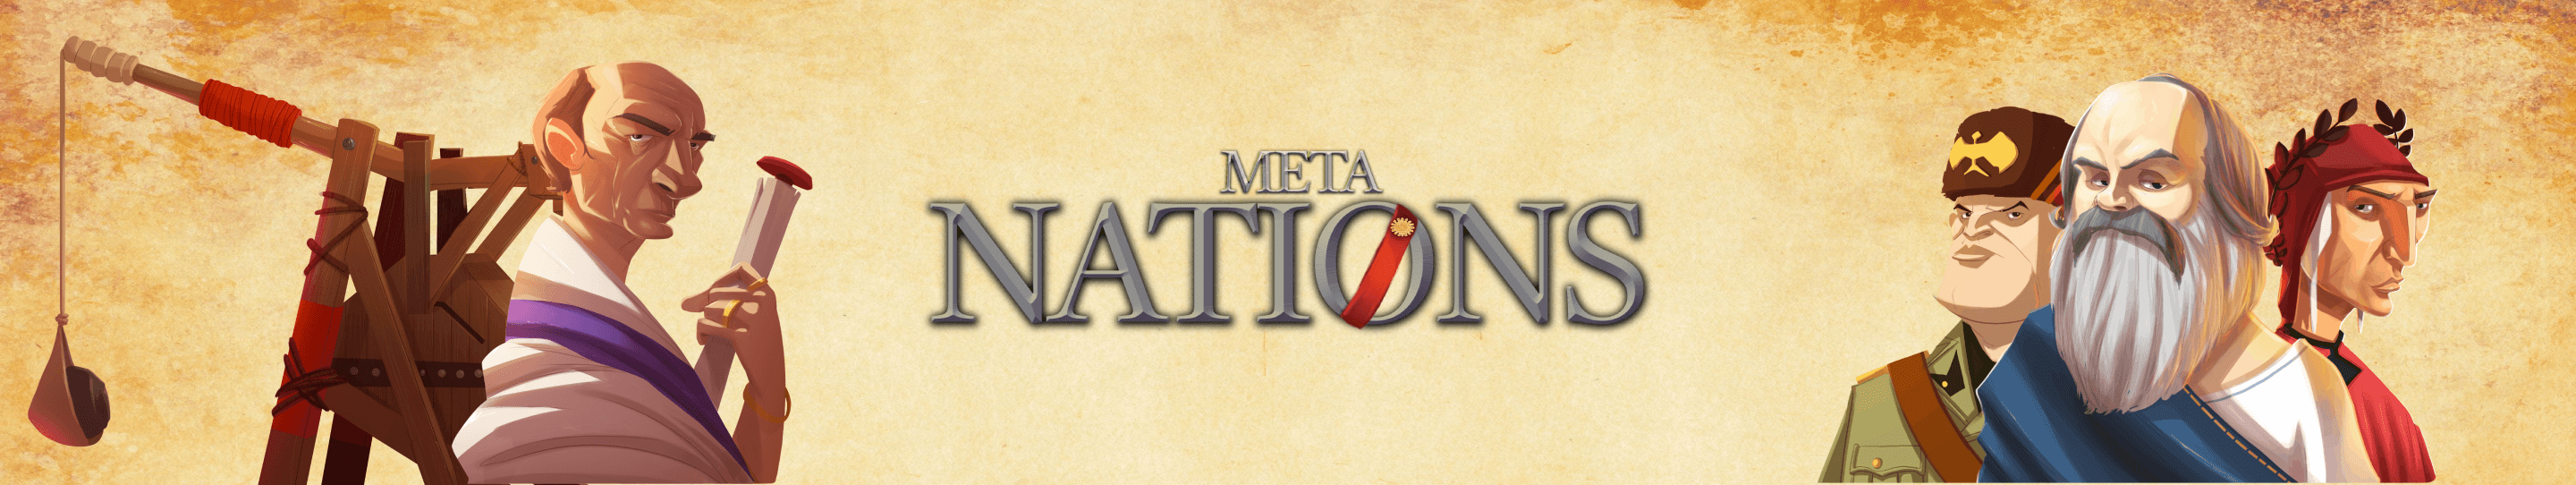 Meta_Nations 橫幅